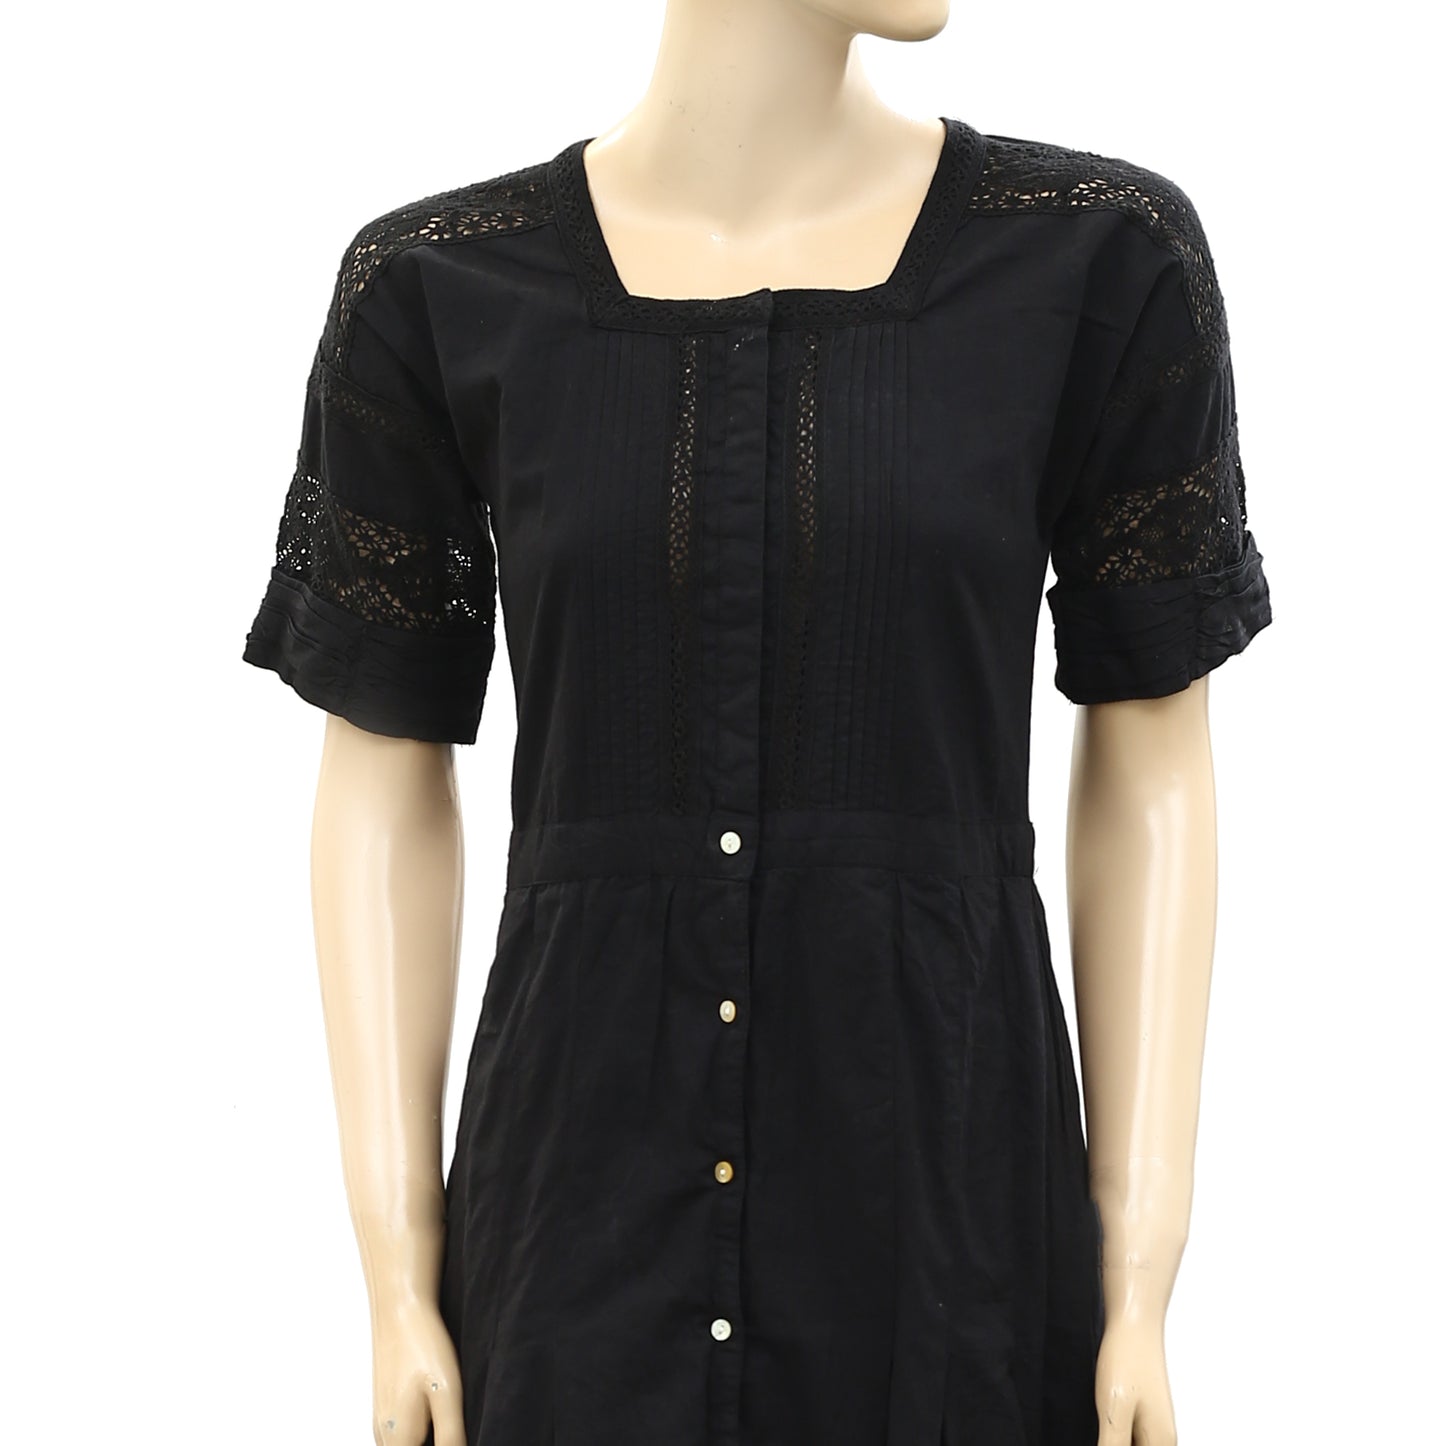 $325 LOVESHACKFANCY Edie Button-Down Maxi Dress